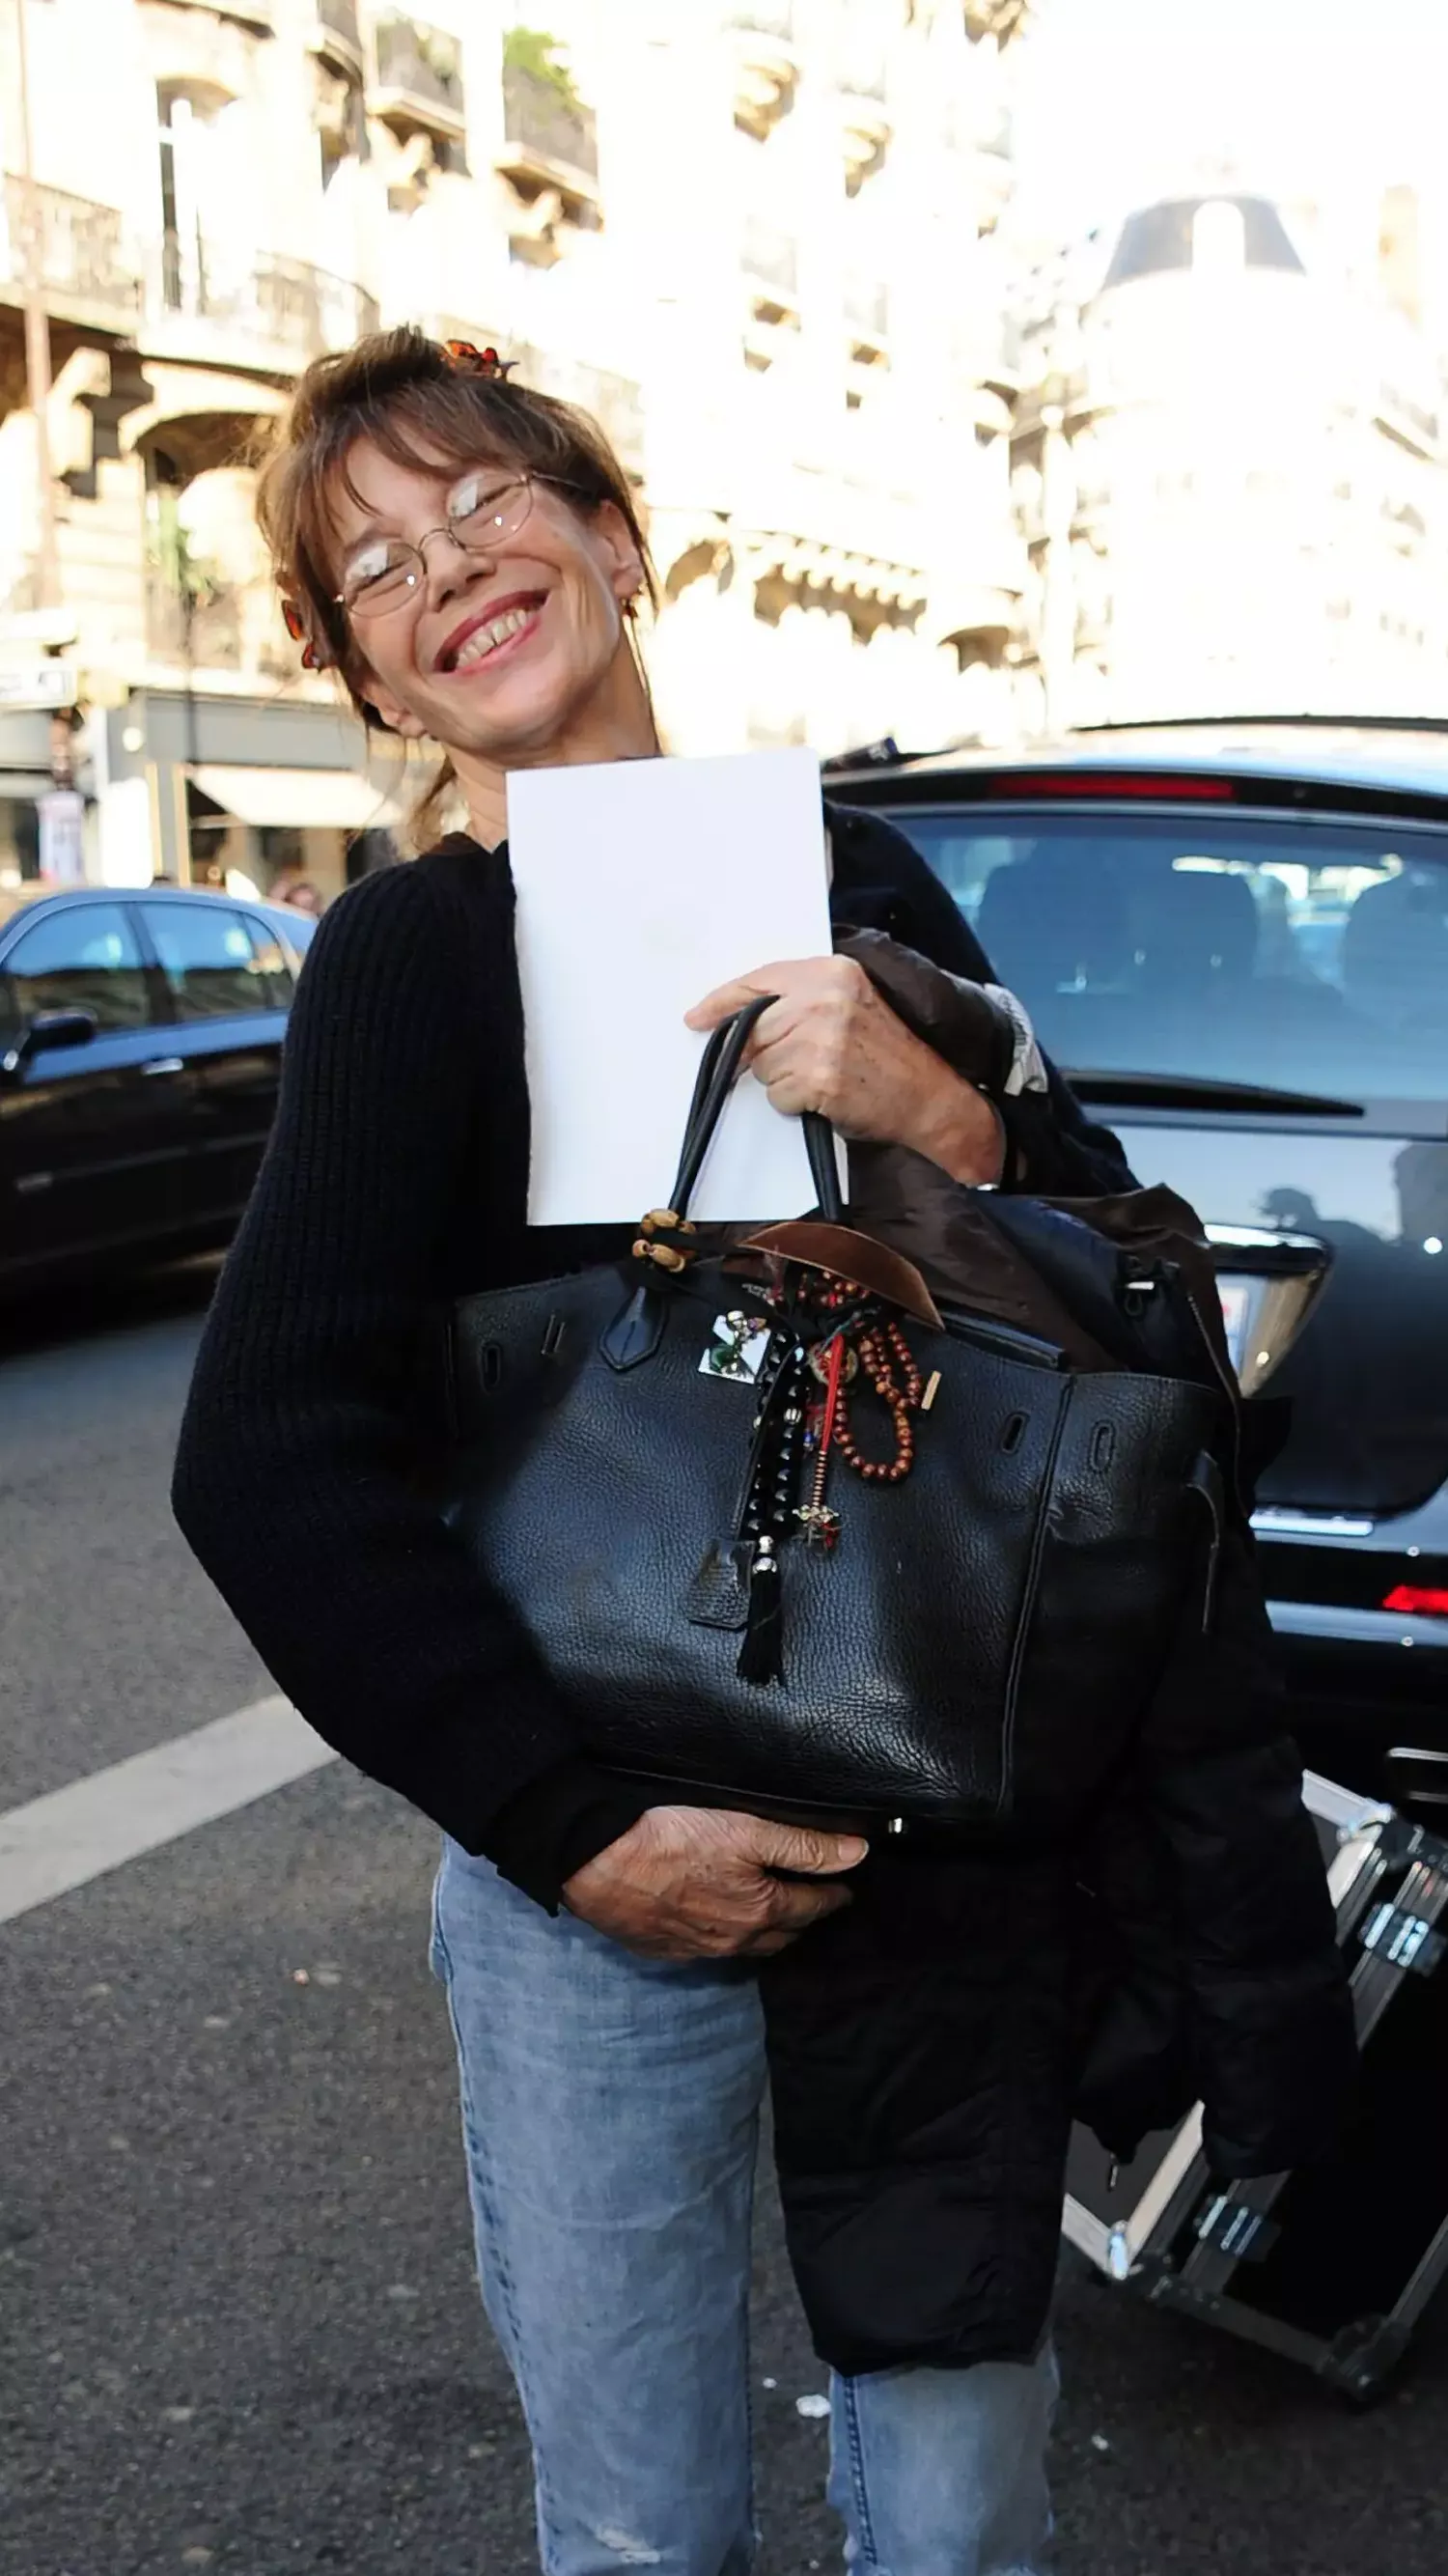 Jane Birkin on the Hermès Birkin: How Fashion's Most Iconic Handbag Was  First Sketched on a Sickbag